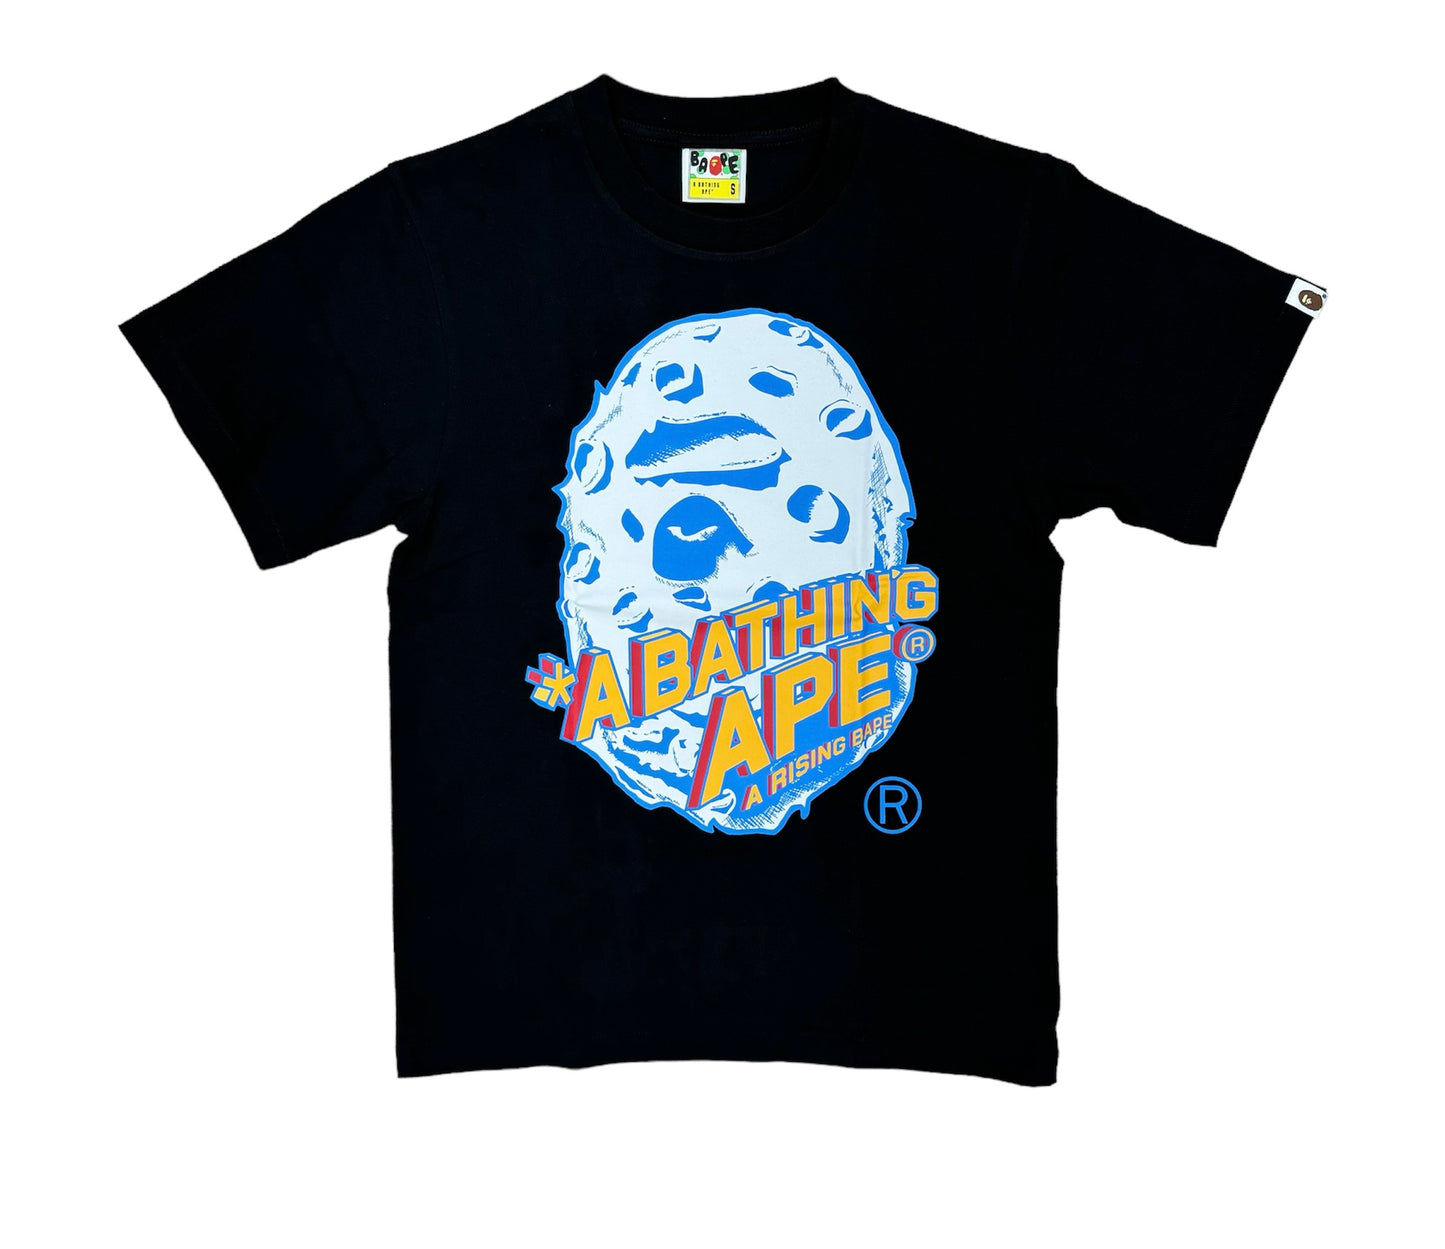 A Bathing Ape Bape “Moon Ape Head” Black T-Shirt